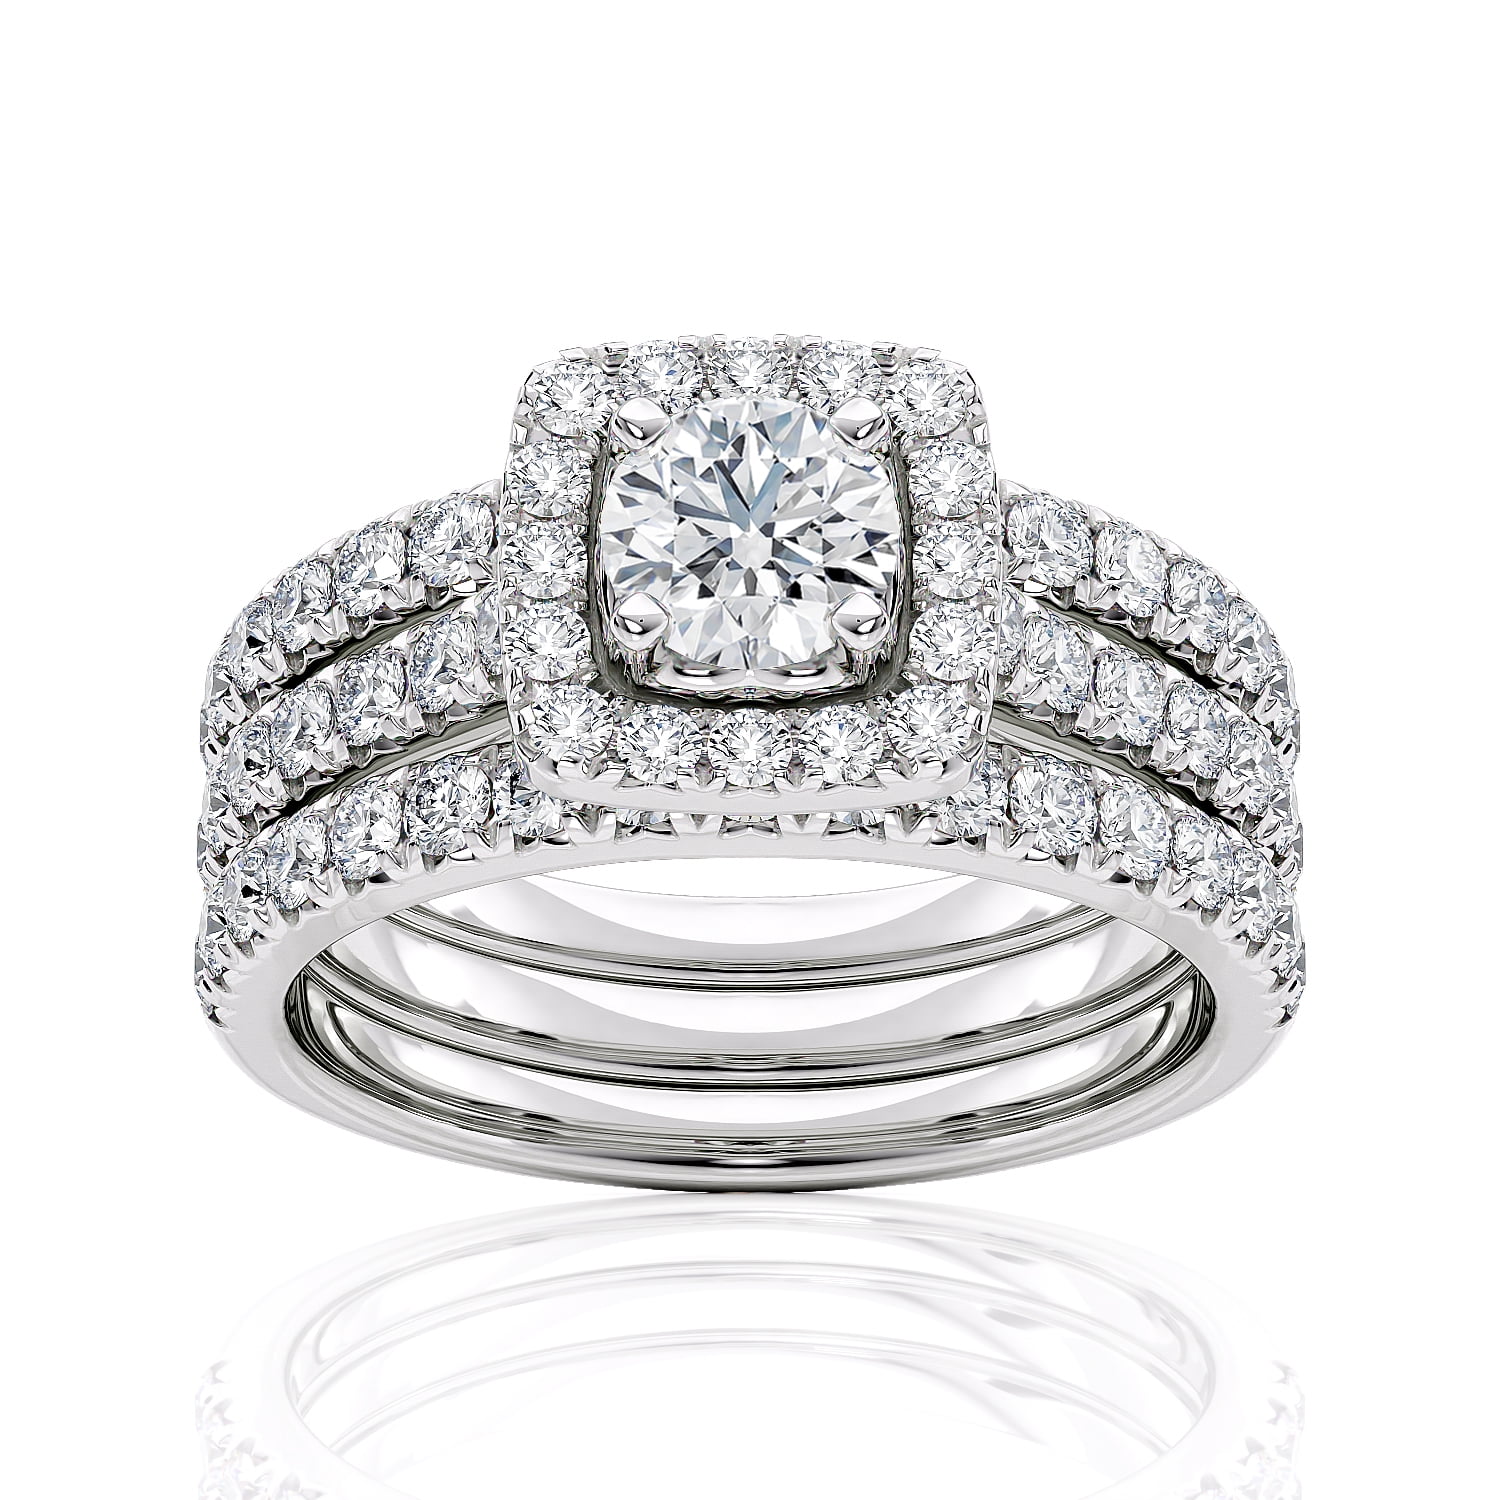 A Timeless Beauty | Sunny Diamonds | Diamond jewelry store, Gold ring  designs, Gold jewelry fashion